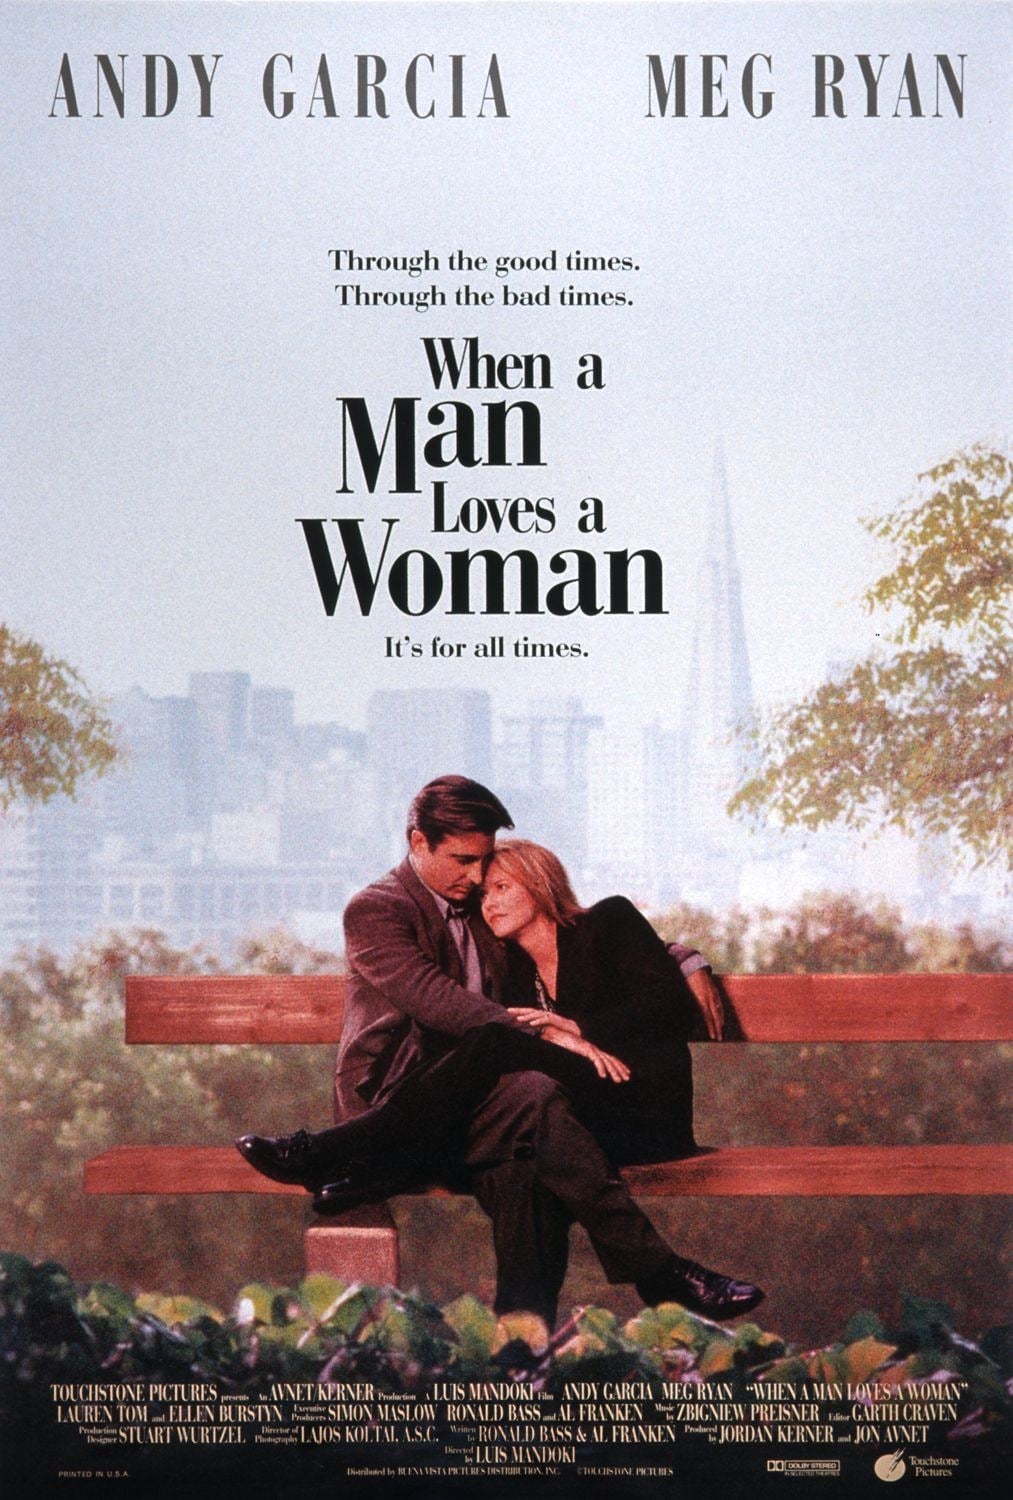 Plakat von "When a Man Loves a Woman"